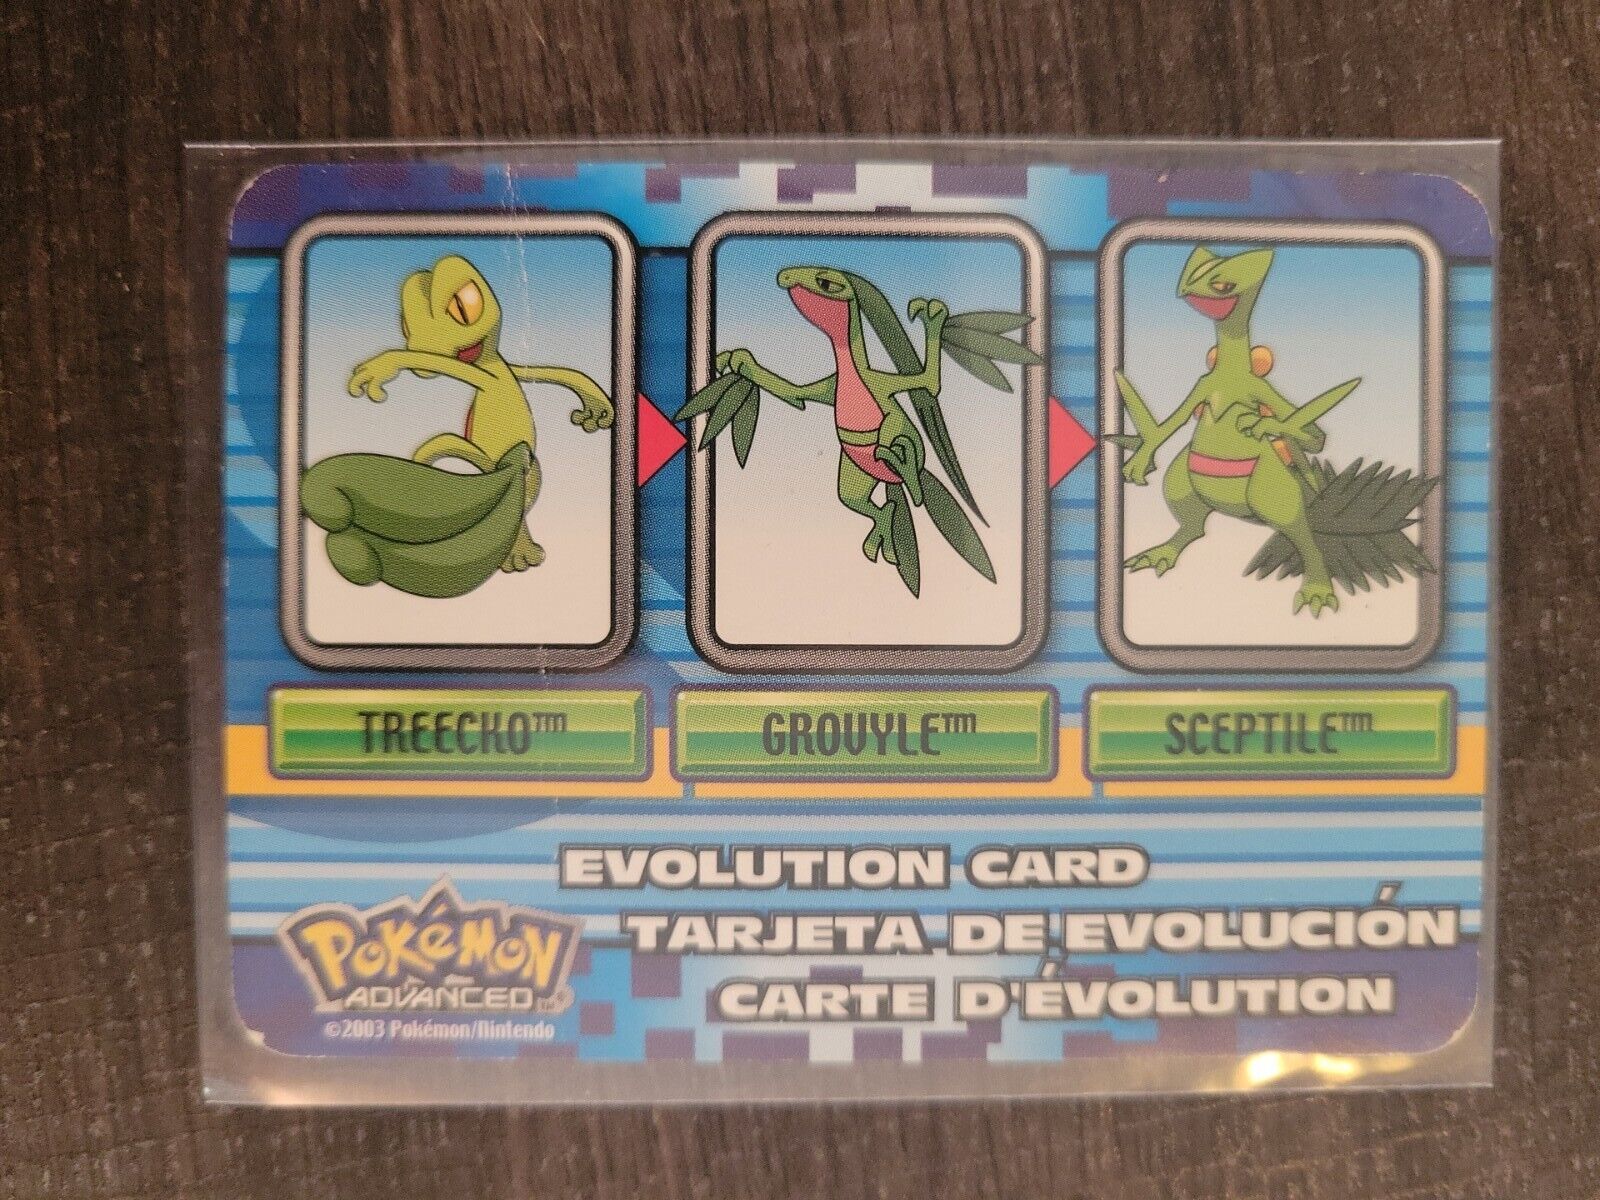 Pokemon Advanced Evolution Card -- Treecko Grovyle Sceptile Pokemon 2003 Card